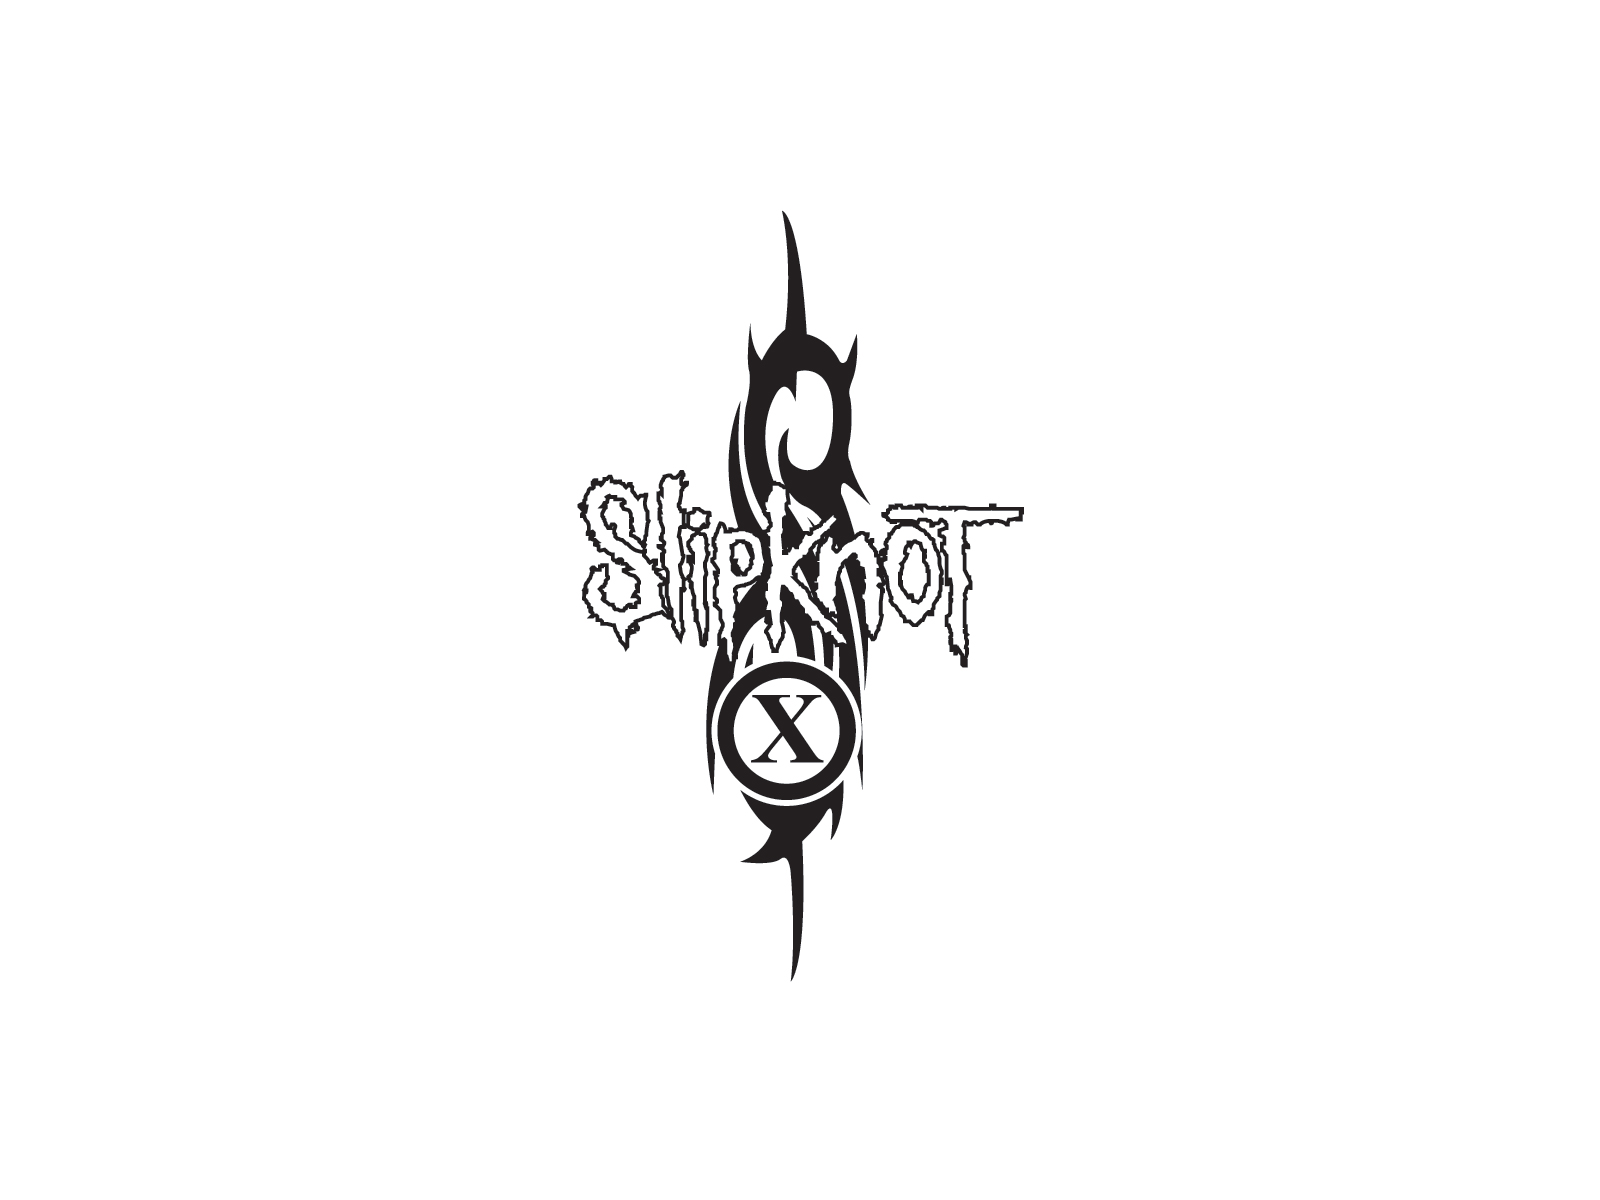 Slipknot Wallpaper Of Nu Metal Band